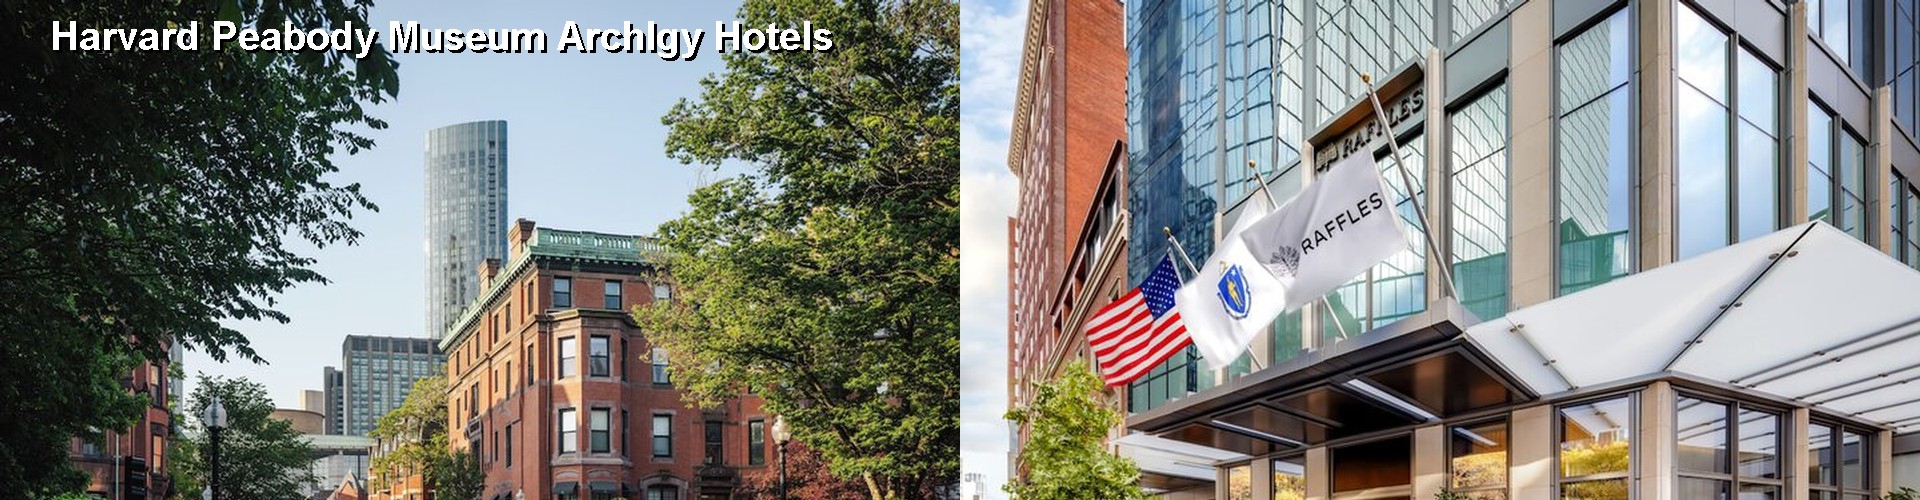 5 Best Hotels near Harvard Peabody Museum Archlgy